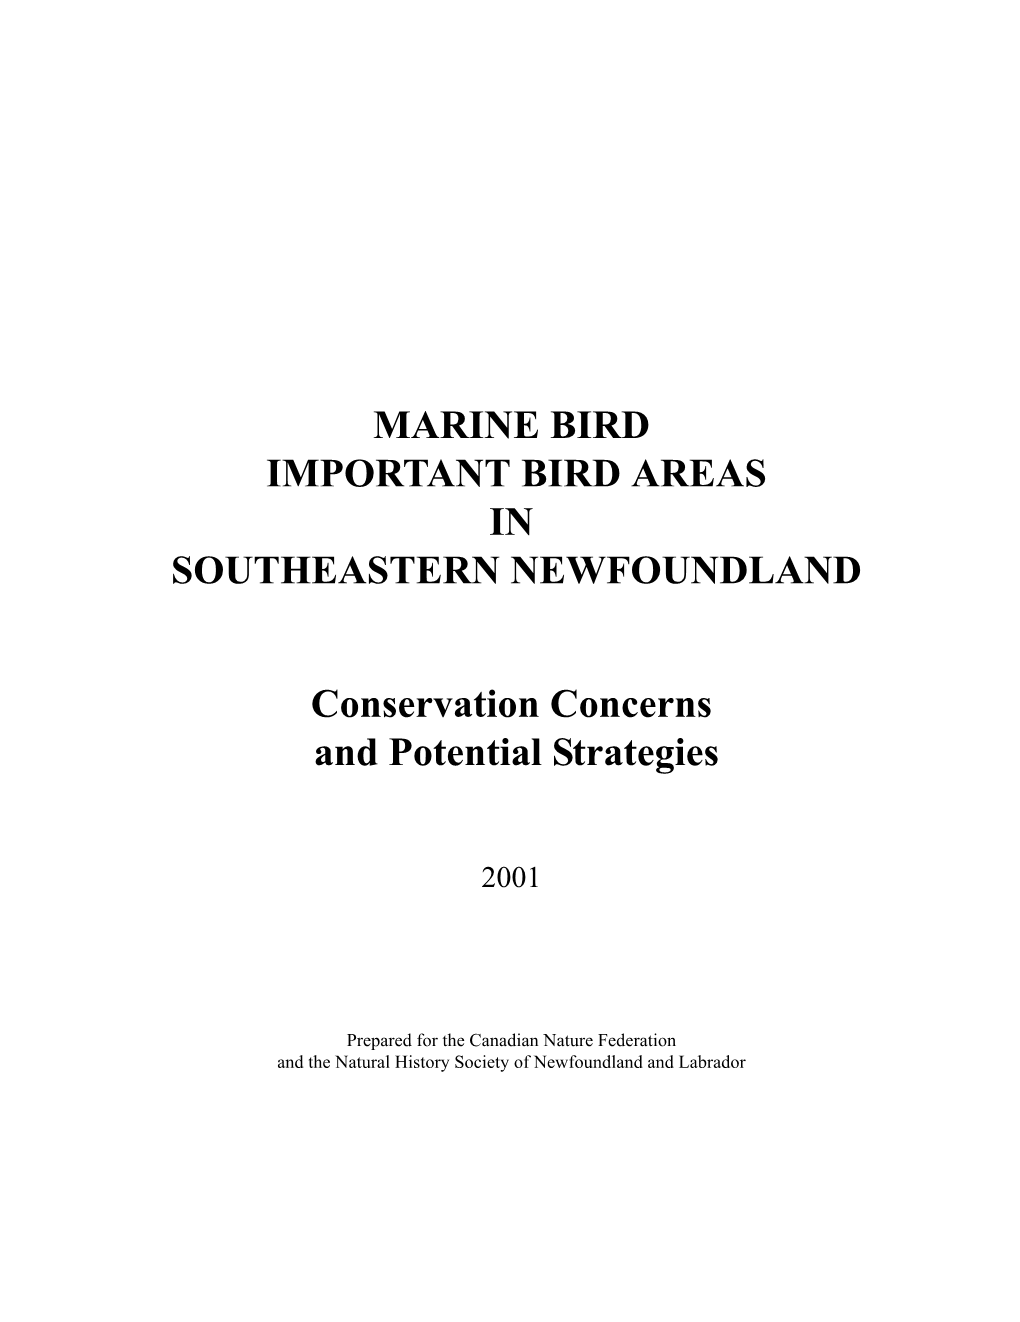 Marine Bird Important Bird Areas in Southeastern Newfoundland